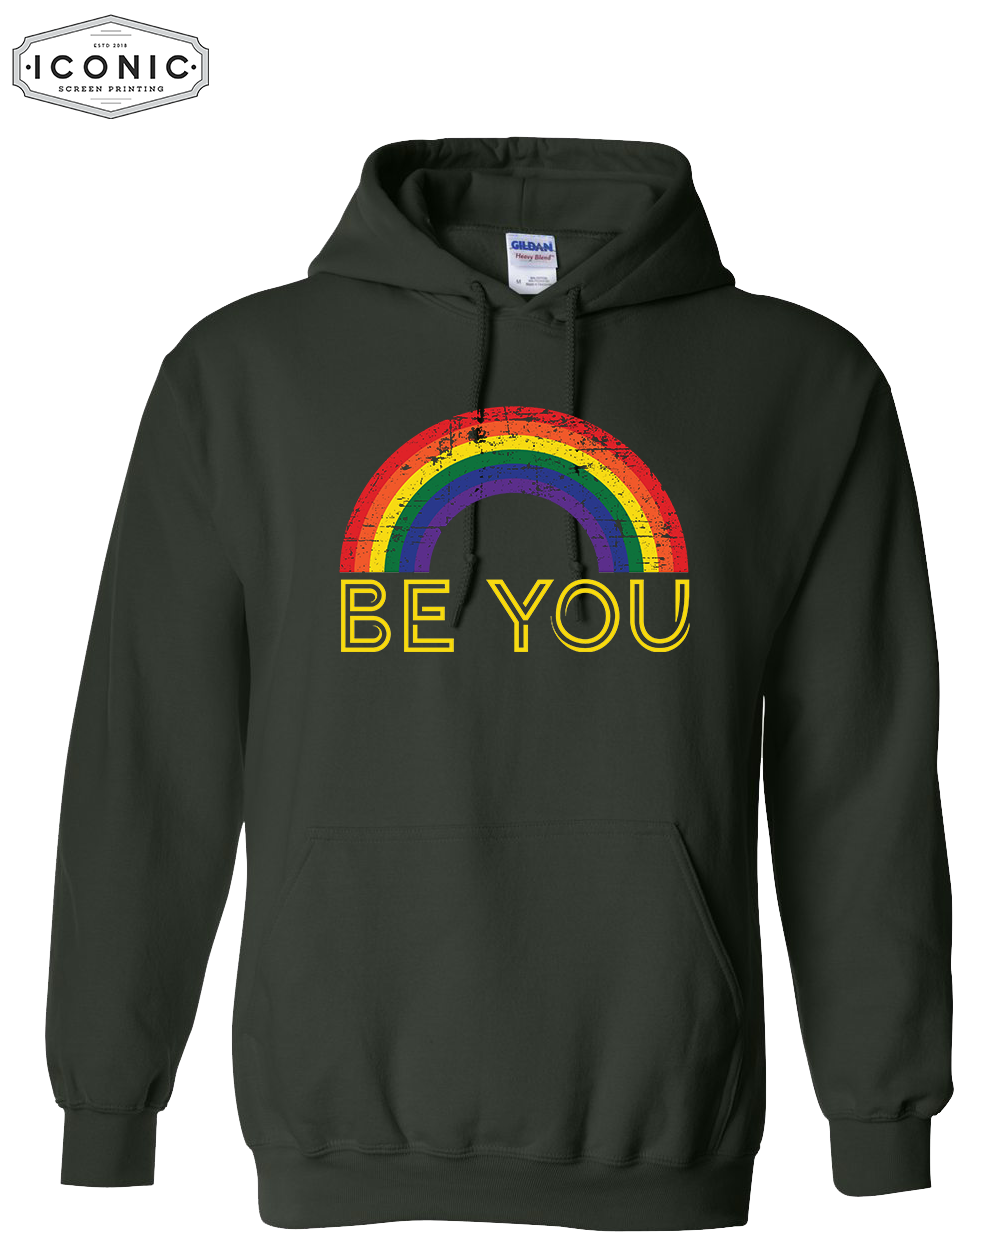 Be You - Heavy Blend Hooded Sweatshirt